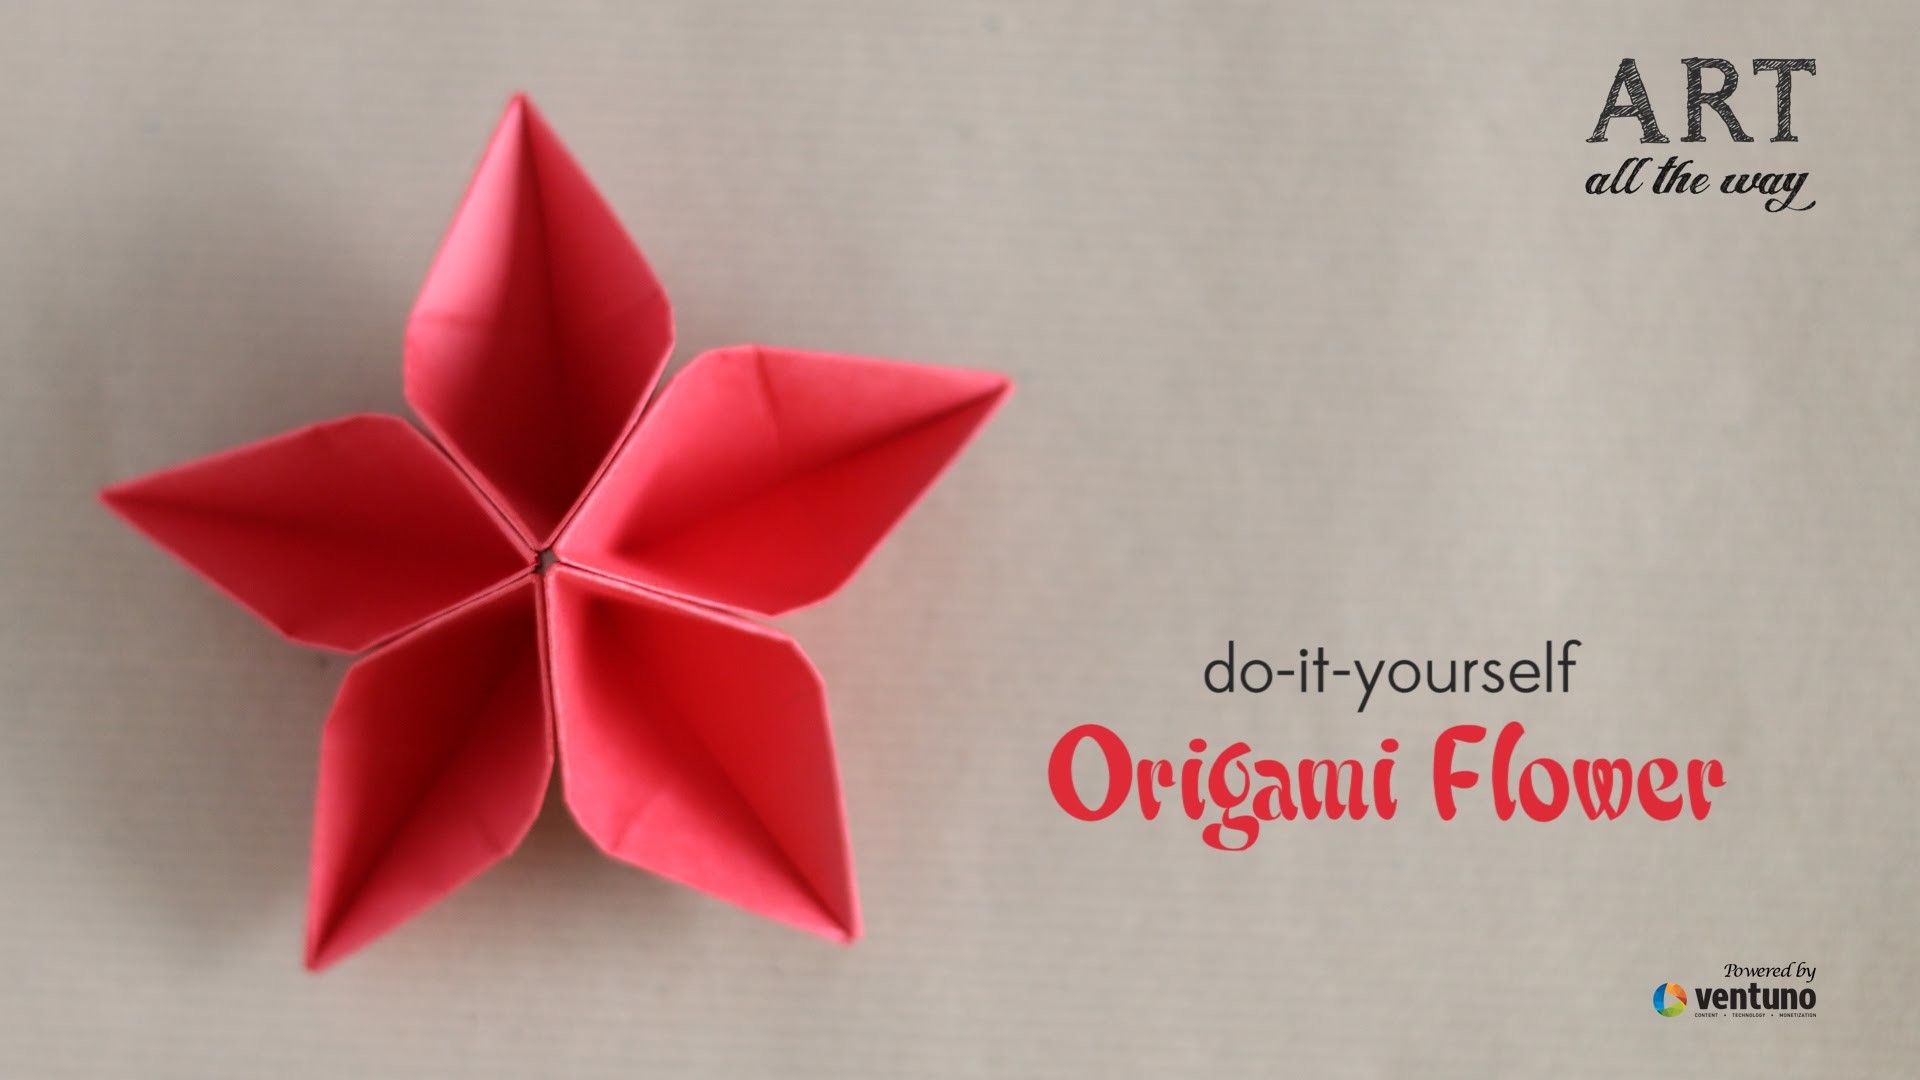 DIY: Origami Flower